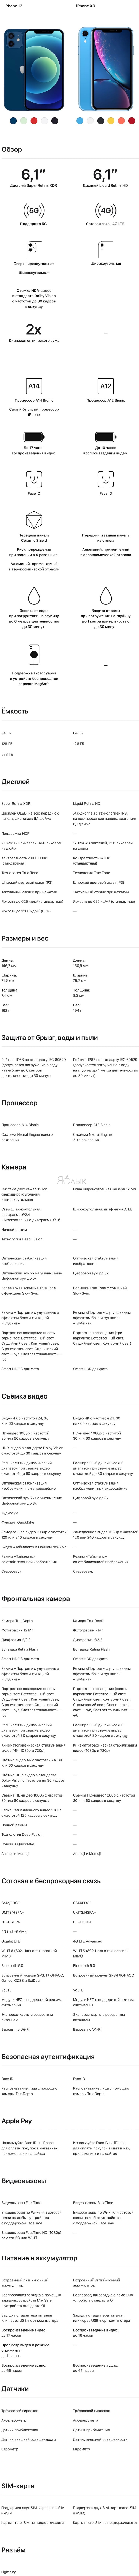 Подробное сравнение технических характеристик (спецификаций) iPhone 12 и iPhone XR